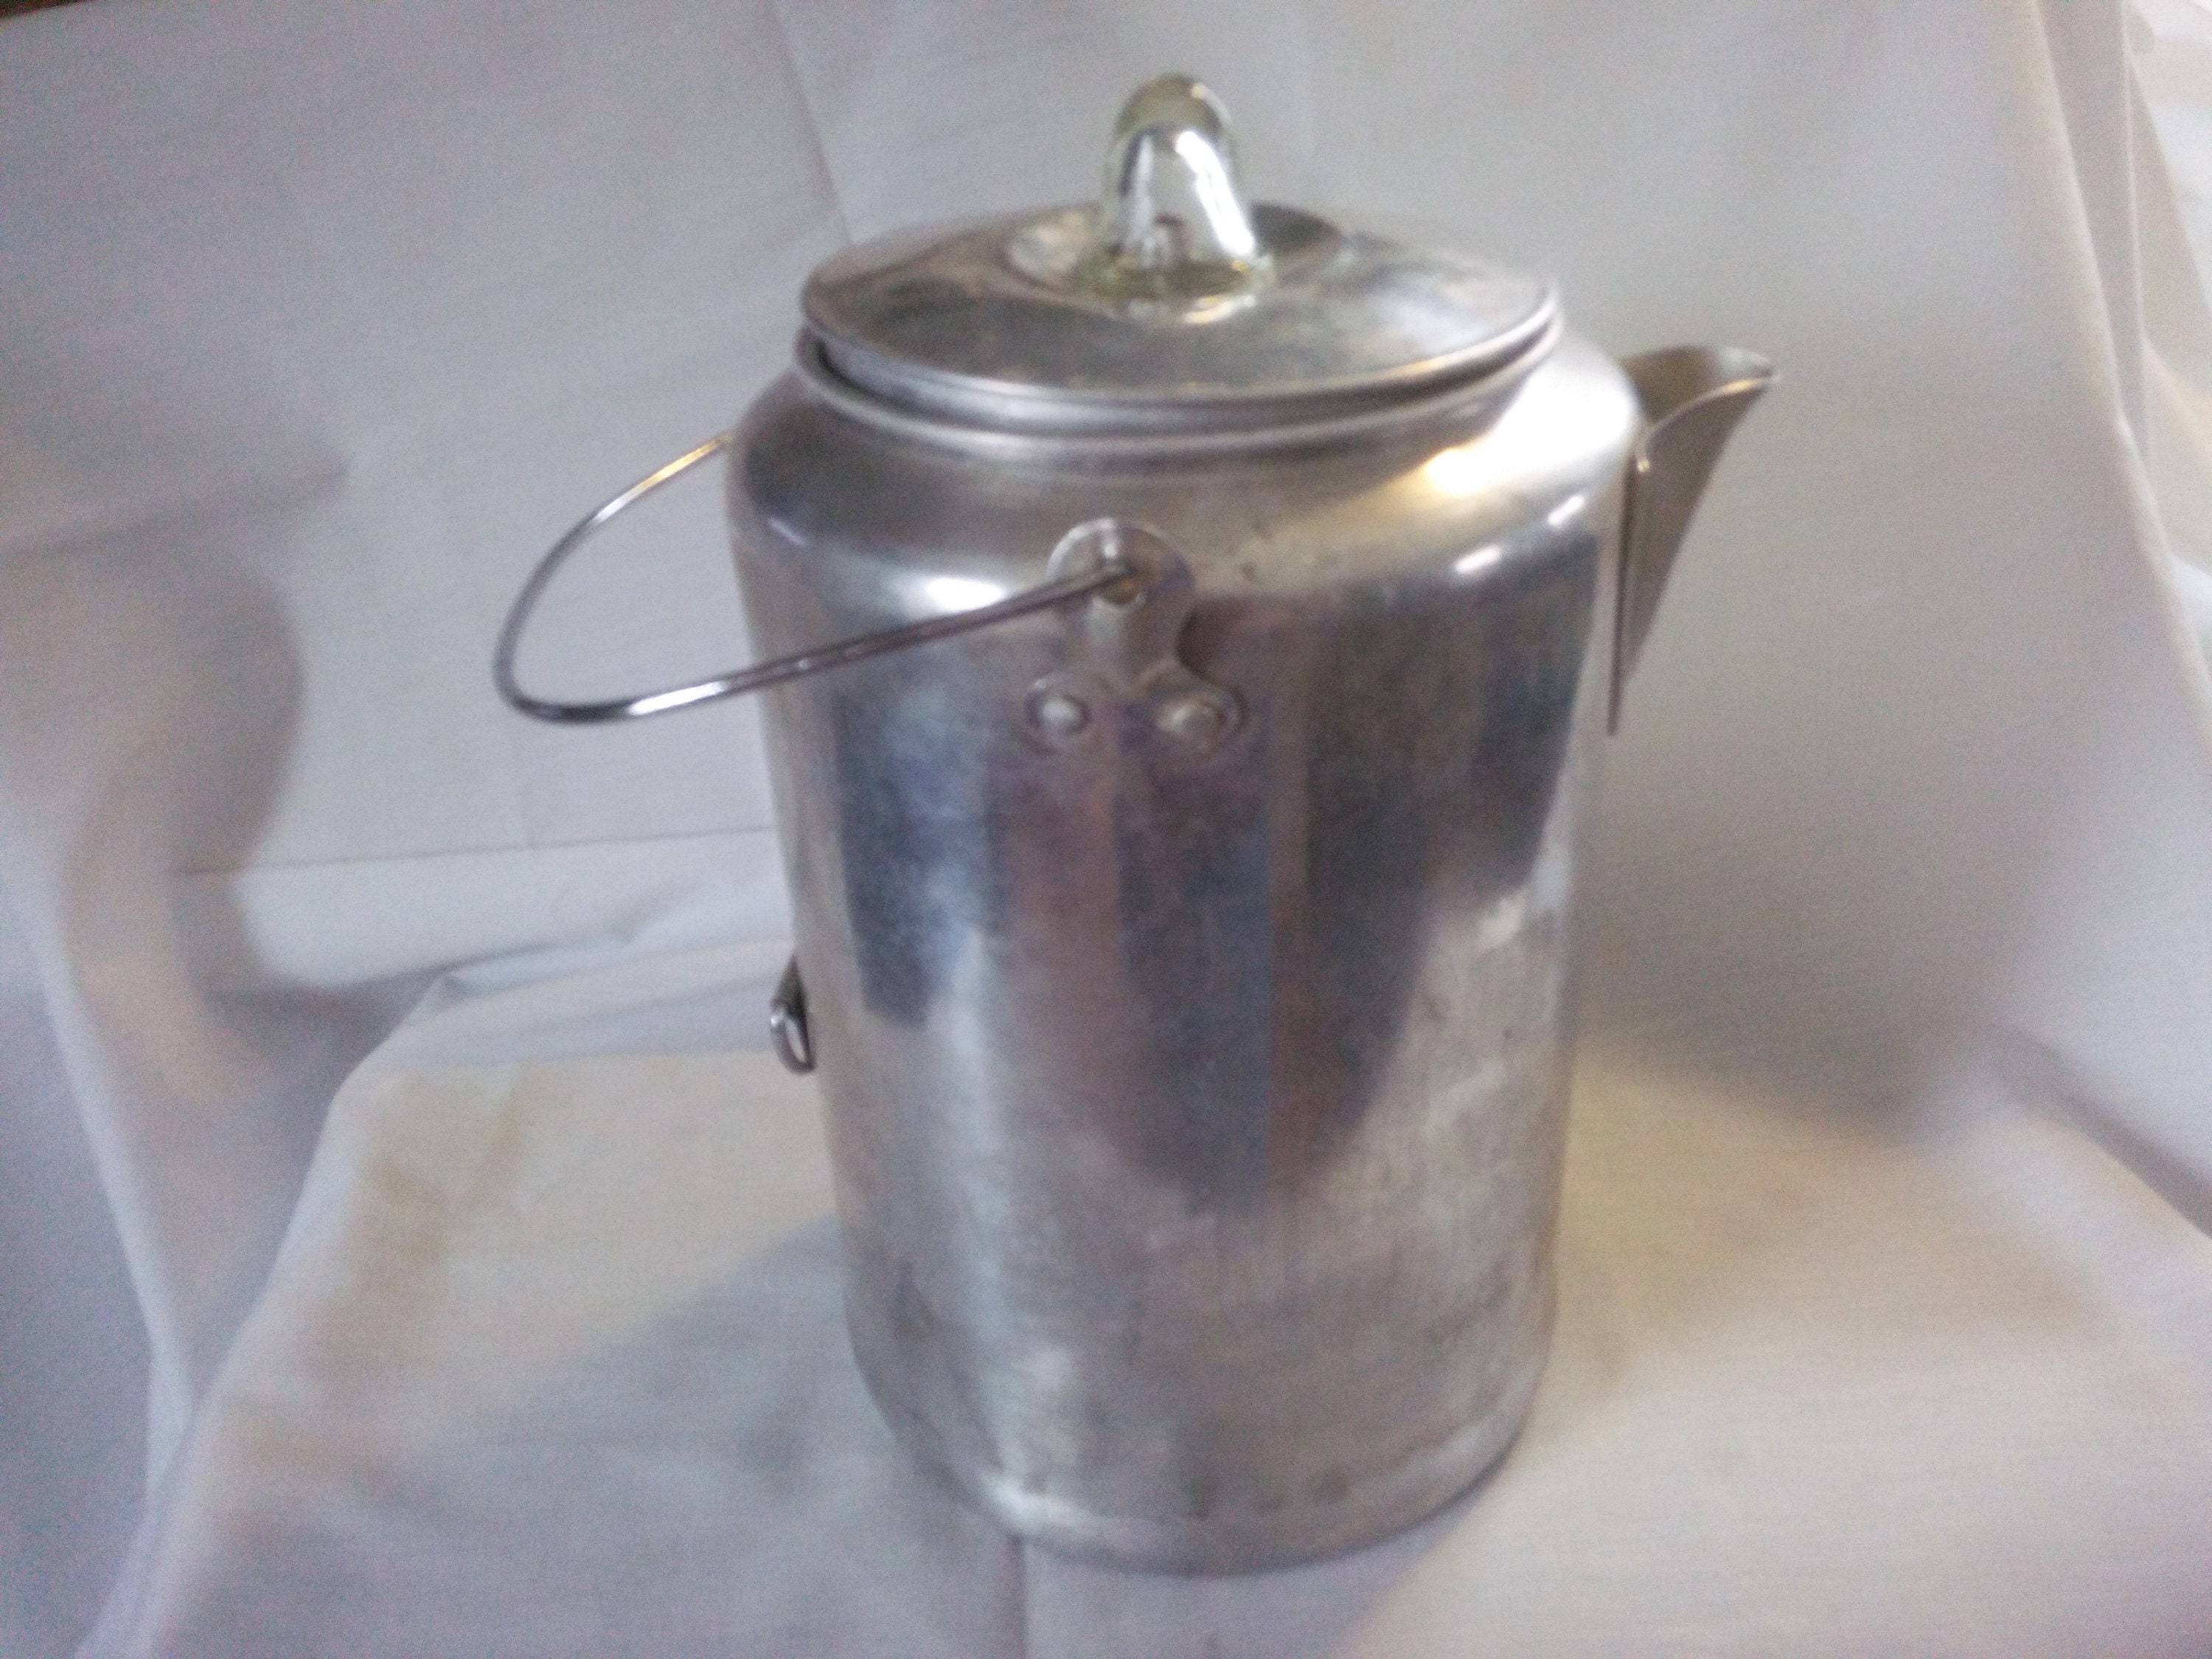 Vintage Century Glass Knob 20 Cup Aluminum Percolator Coffee Maker Camping